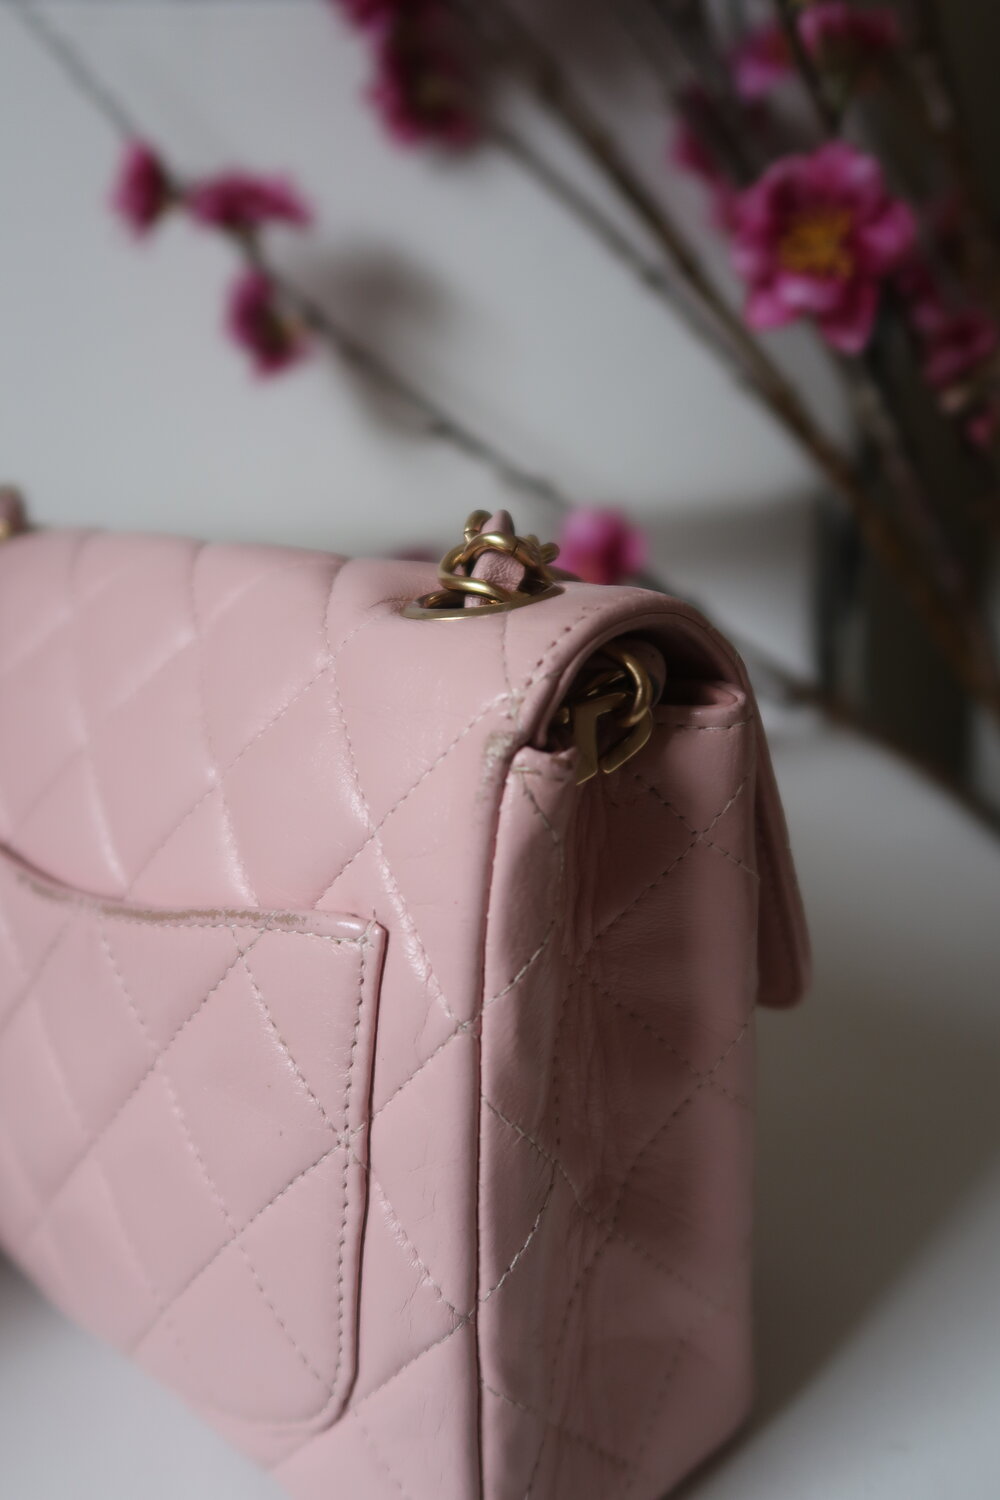 pink mini flap chanel bag